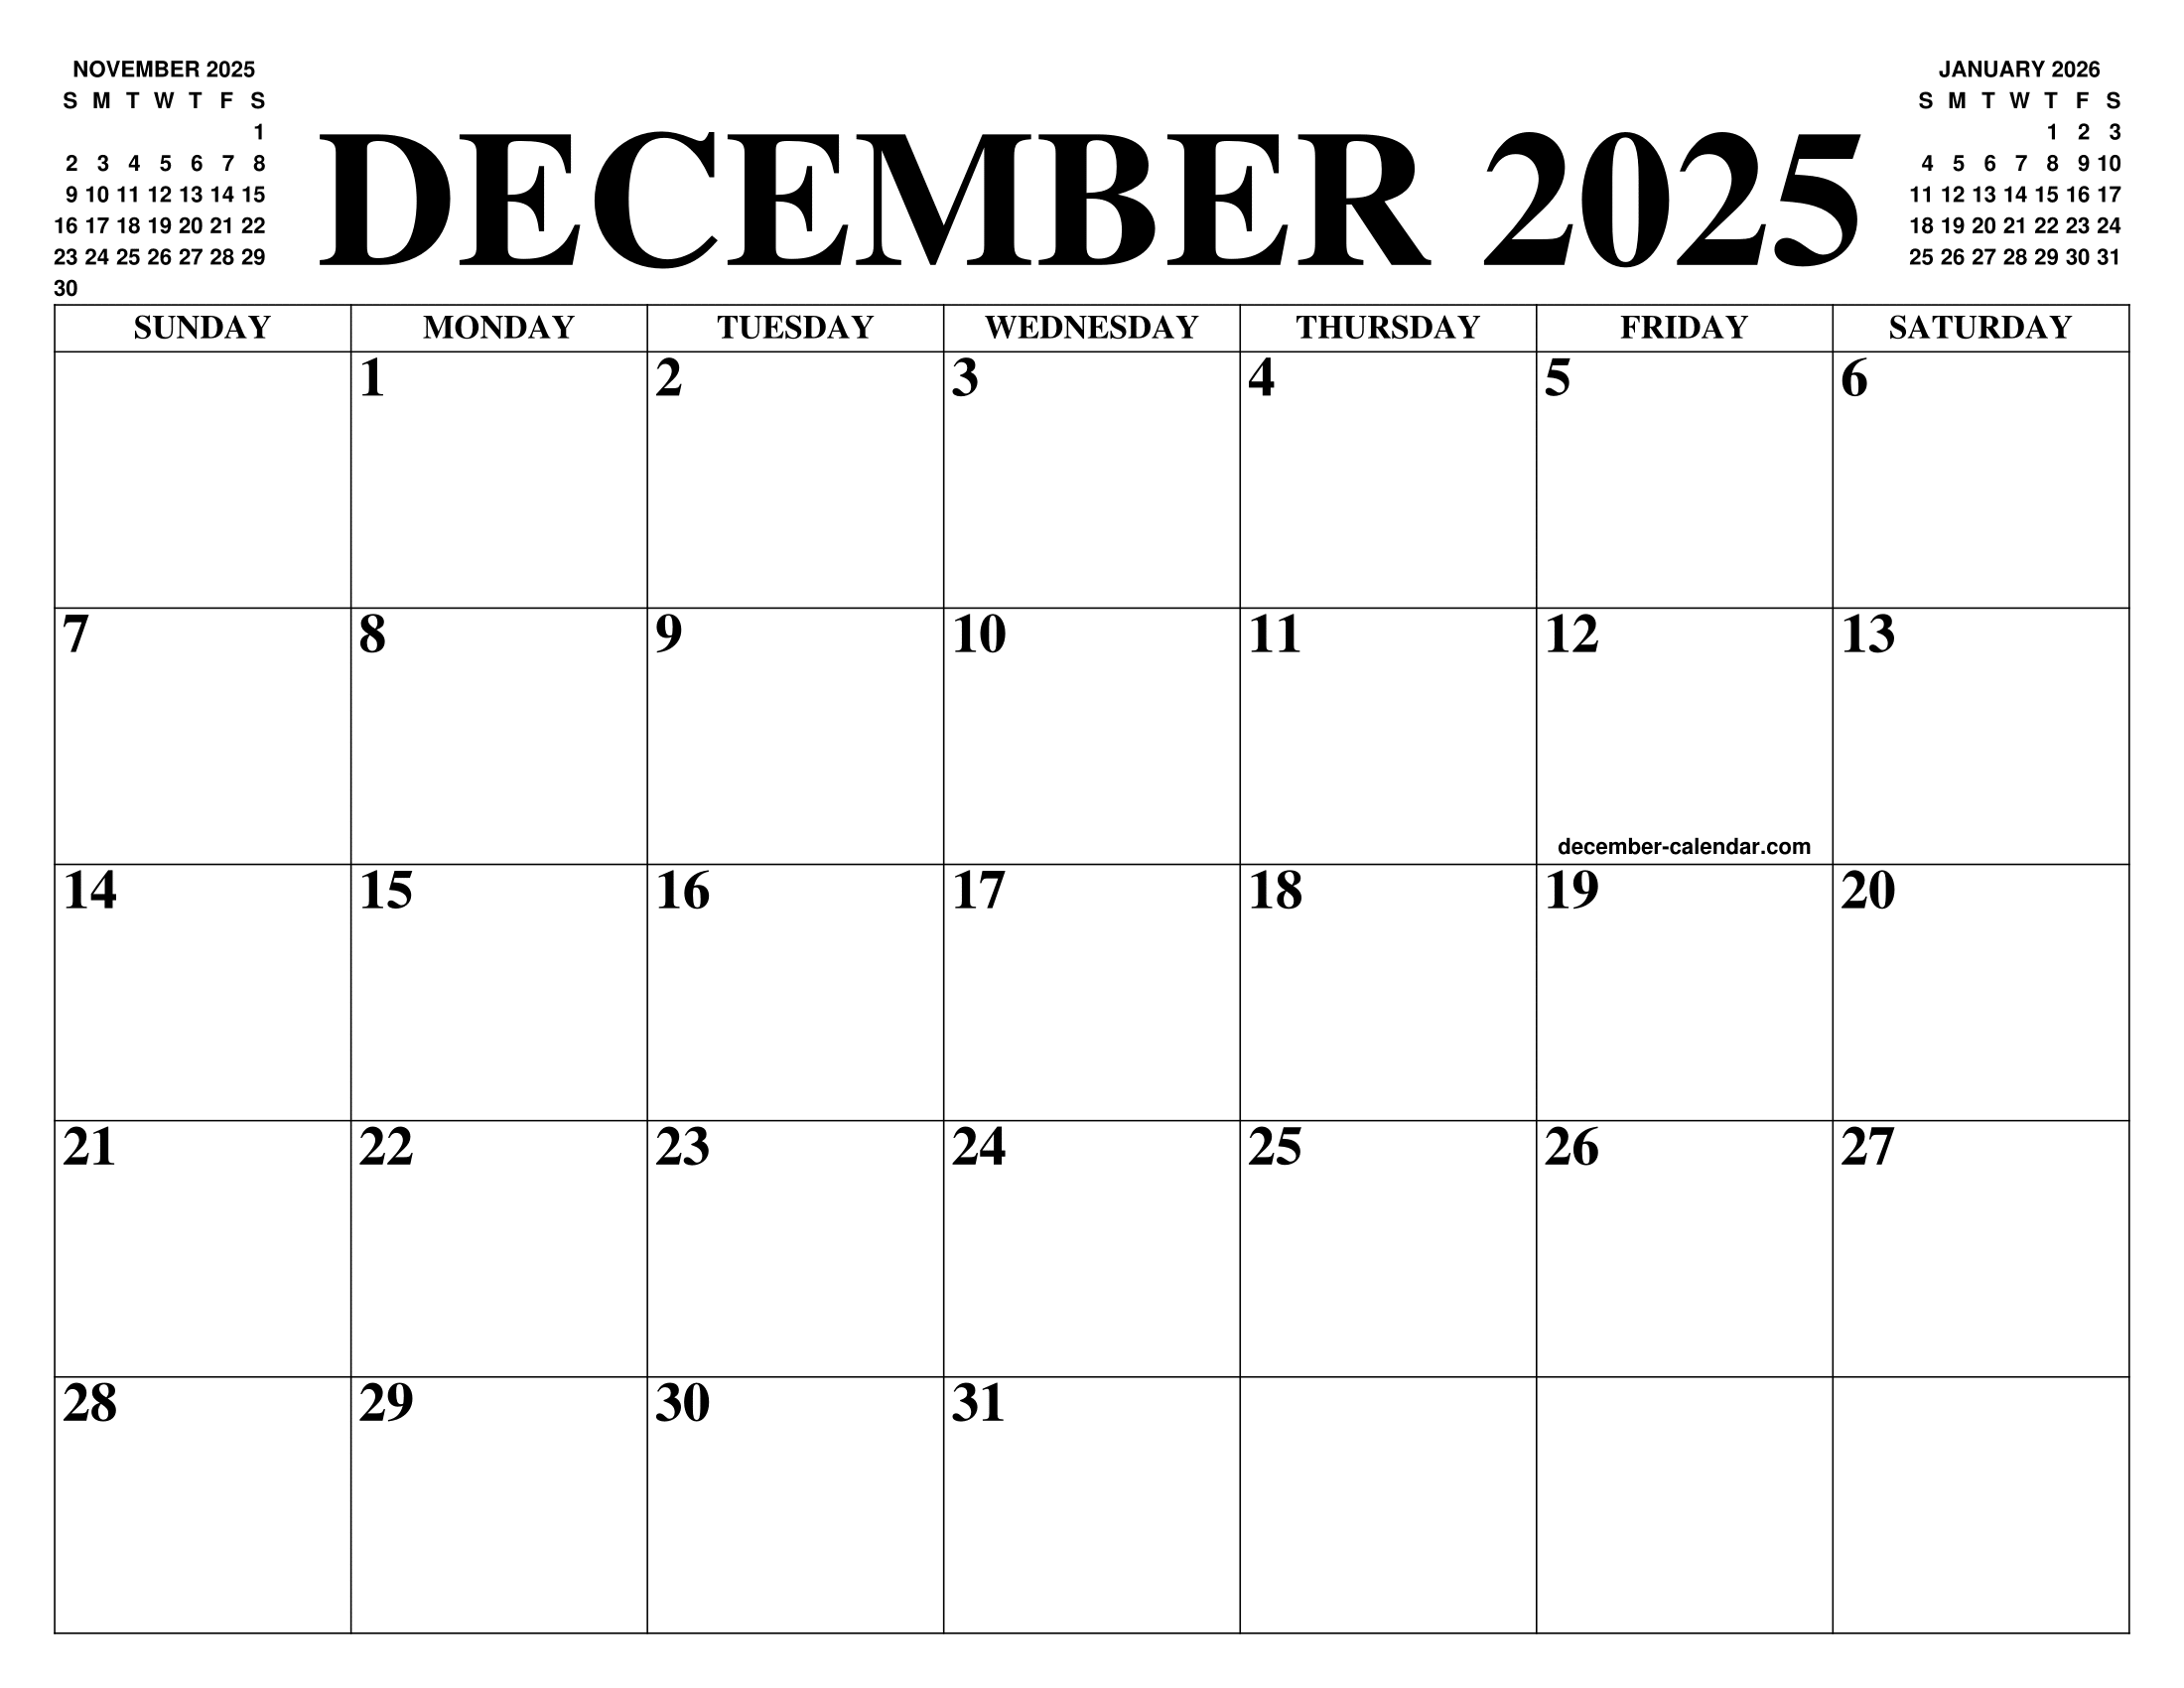 DECEMBER 2025 CALENDAR OF THE MONTH: FREE PRINTABLE DECEMBER CALENDAR